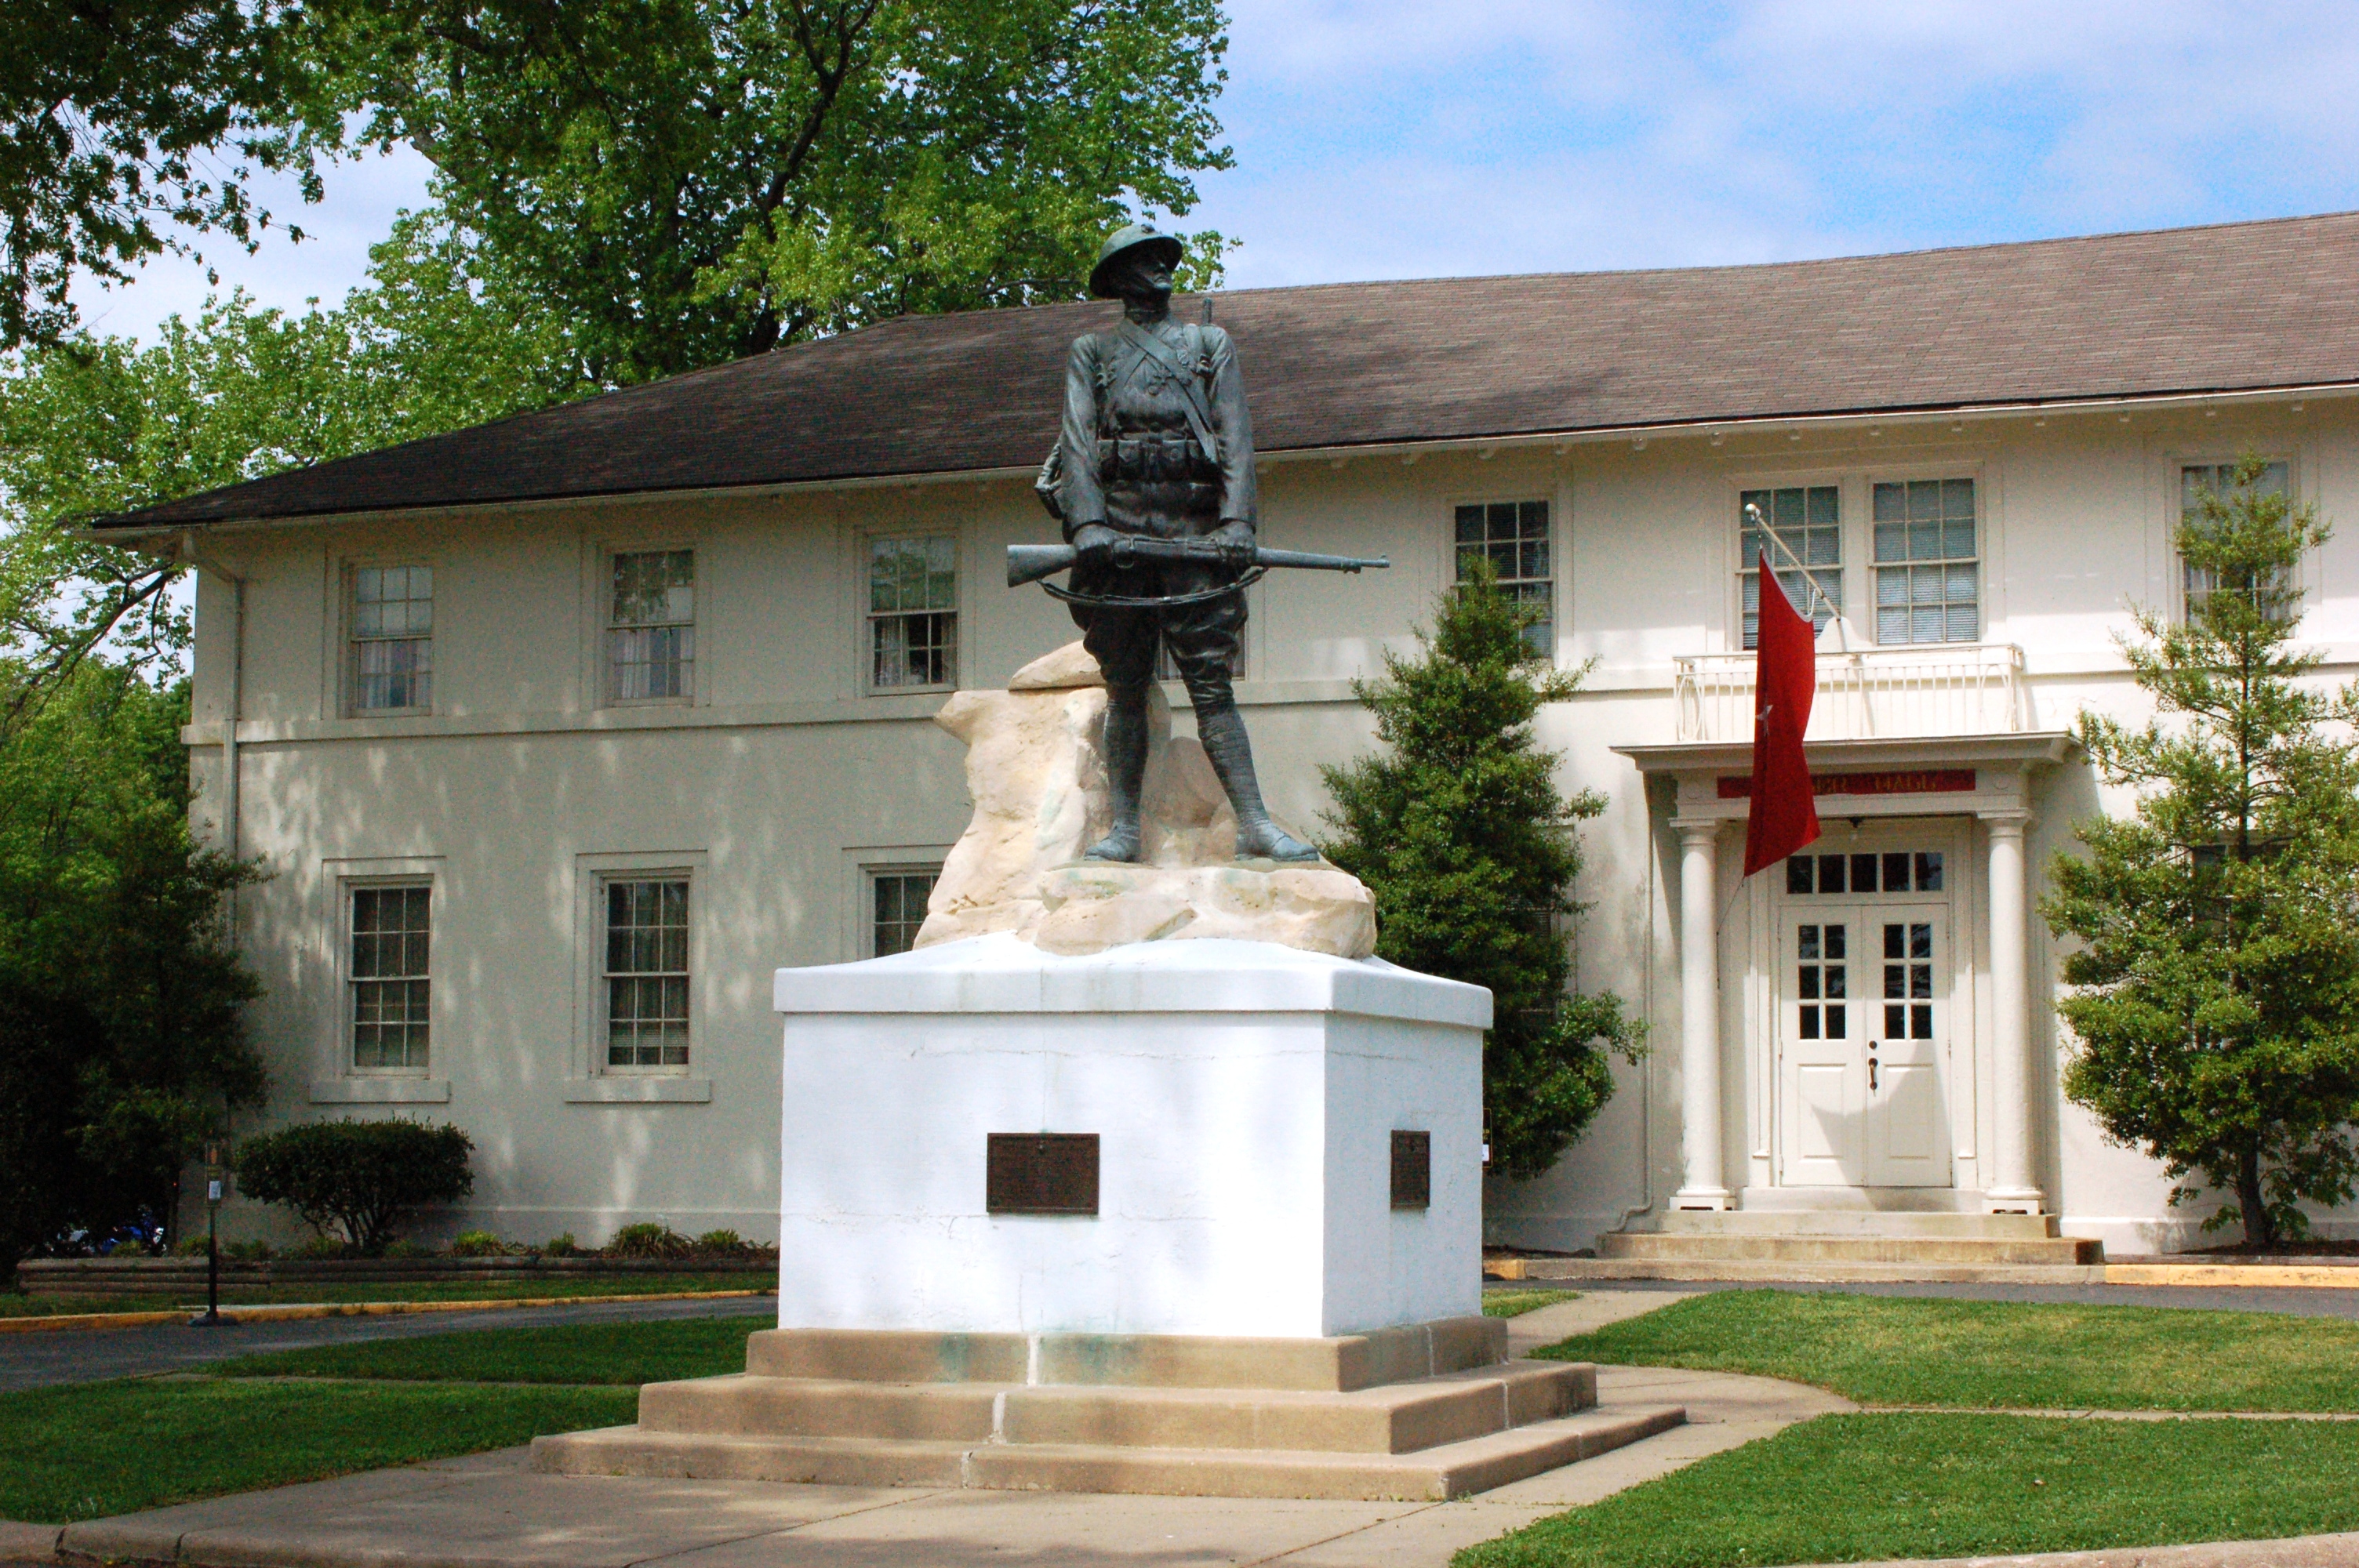 Quantico Marine Corps Base Historic District